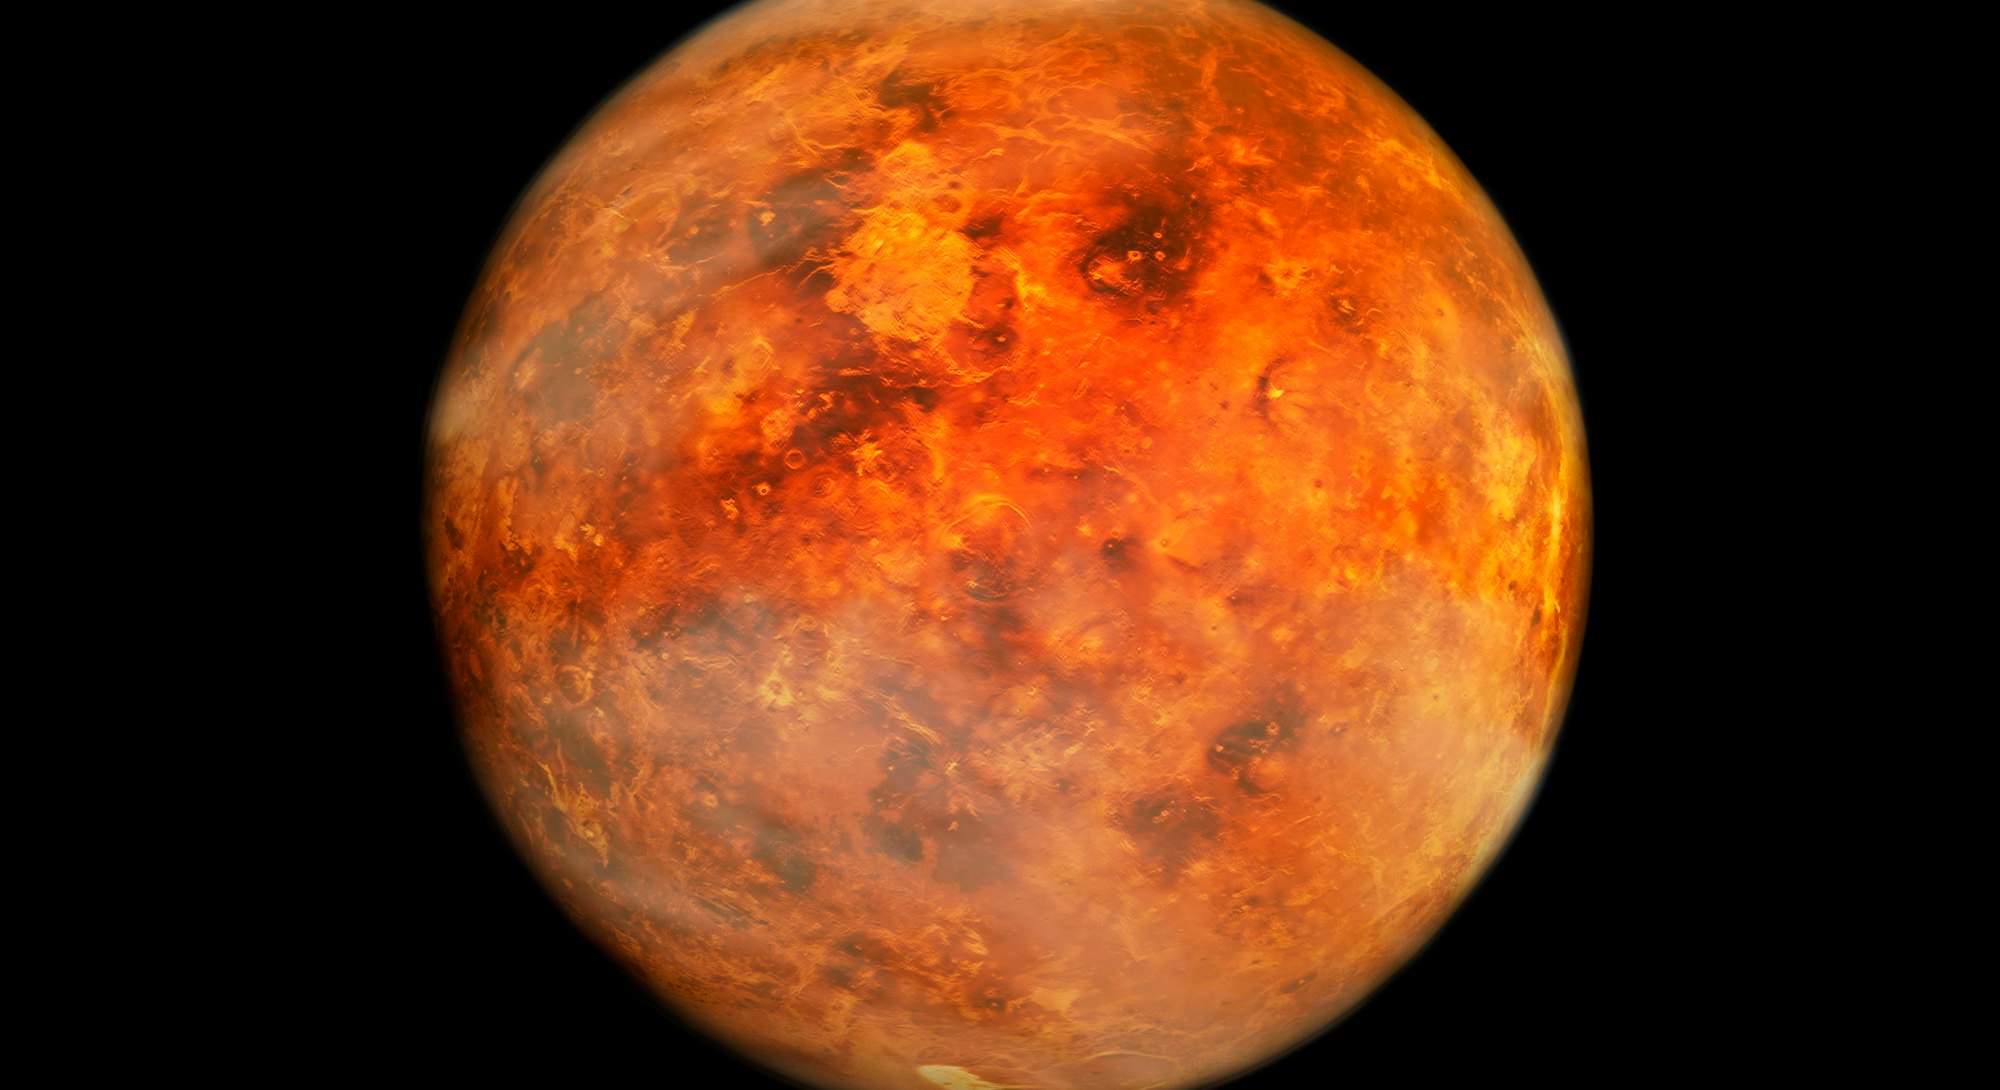 Venus enters its retrograde period on Dec. 19 and lasts until Jan 29, 2022.